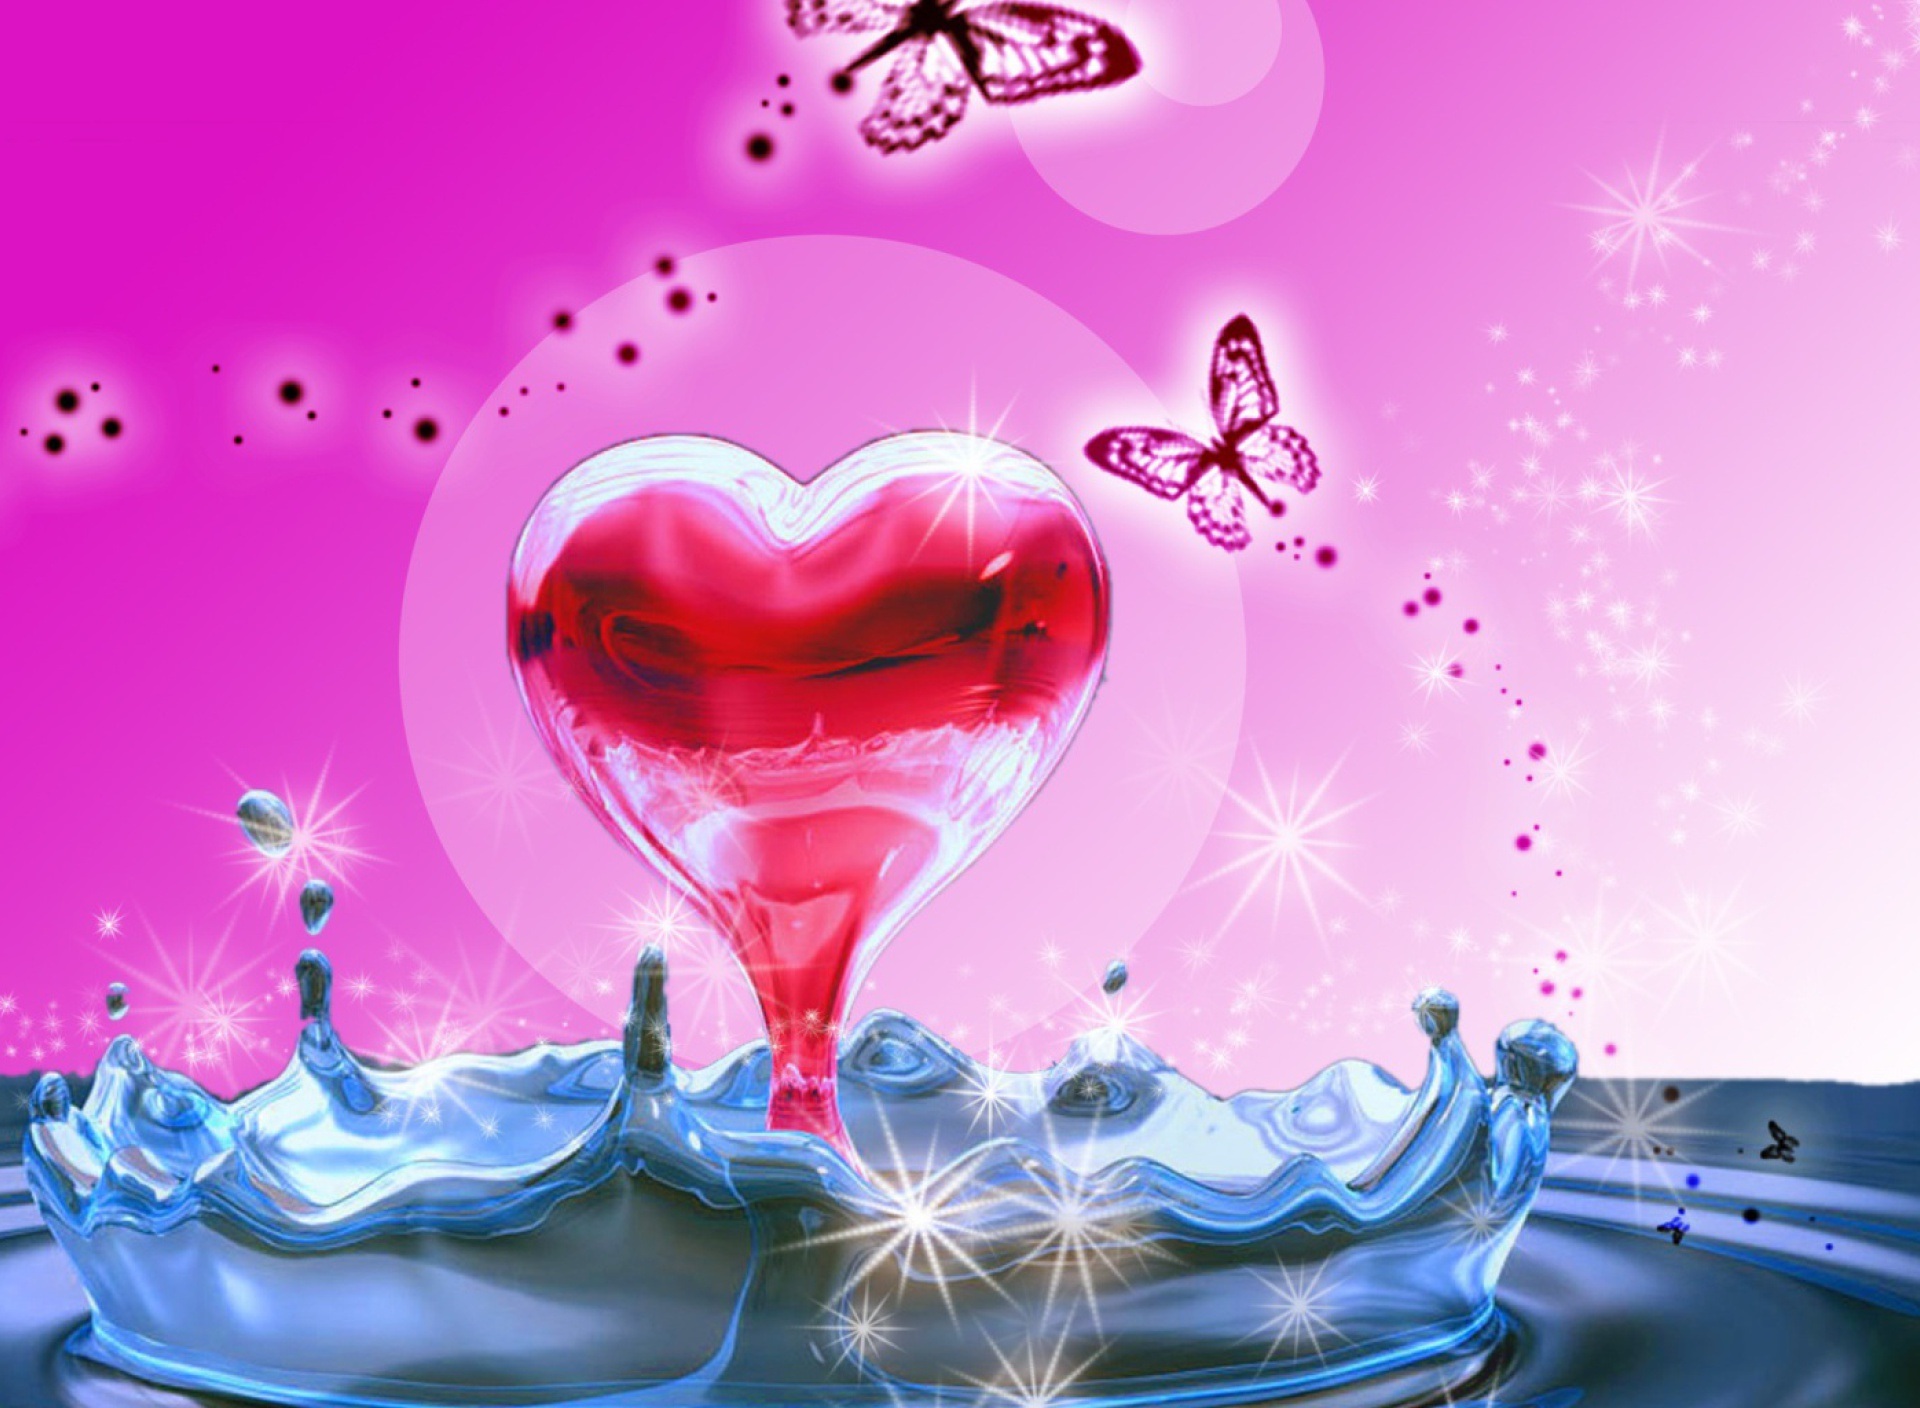  3D Heart In Water 1920x1408 wallpaper1920X1408 wallpaper screensaver